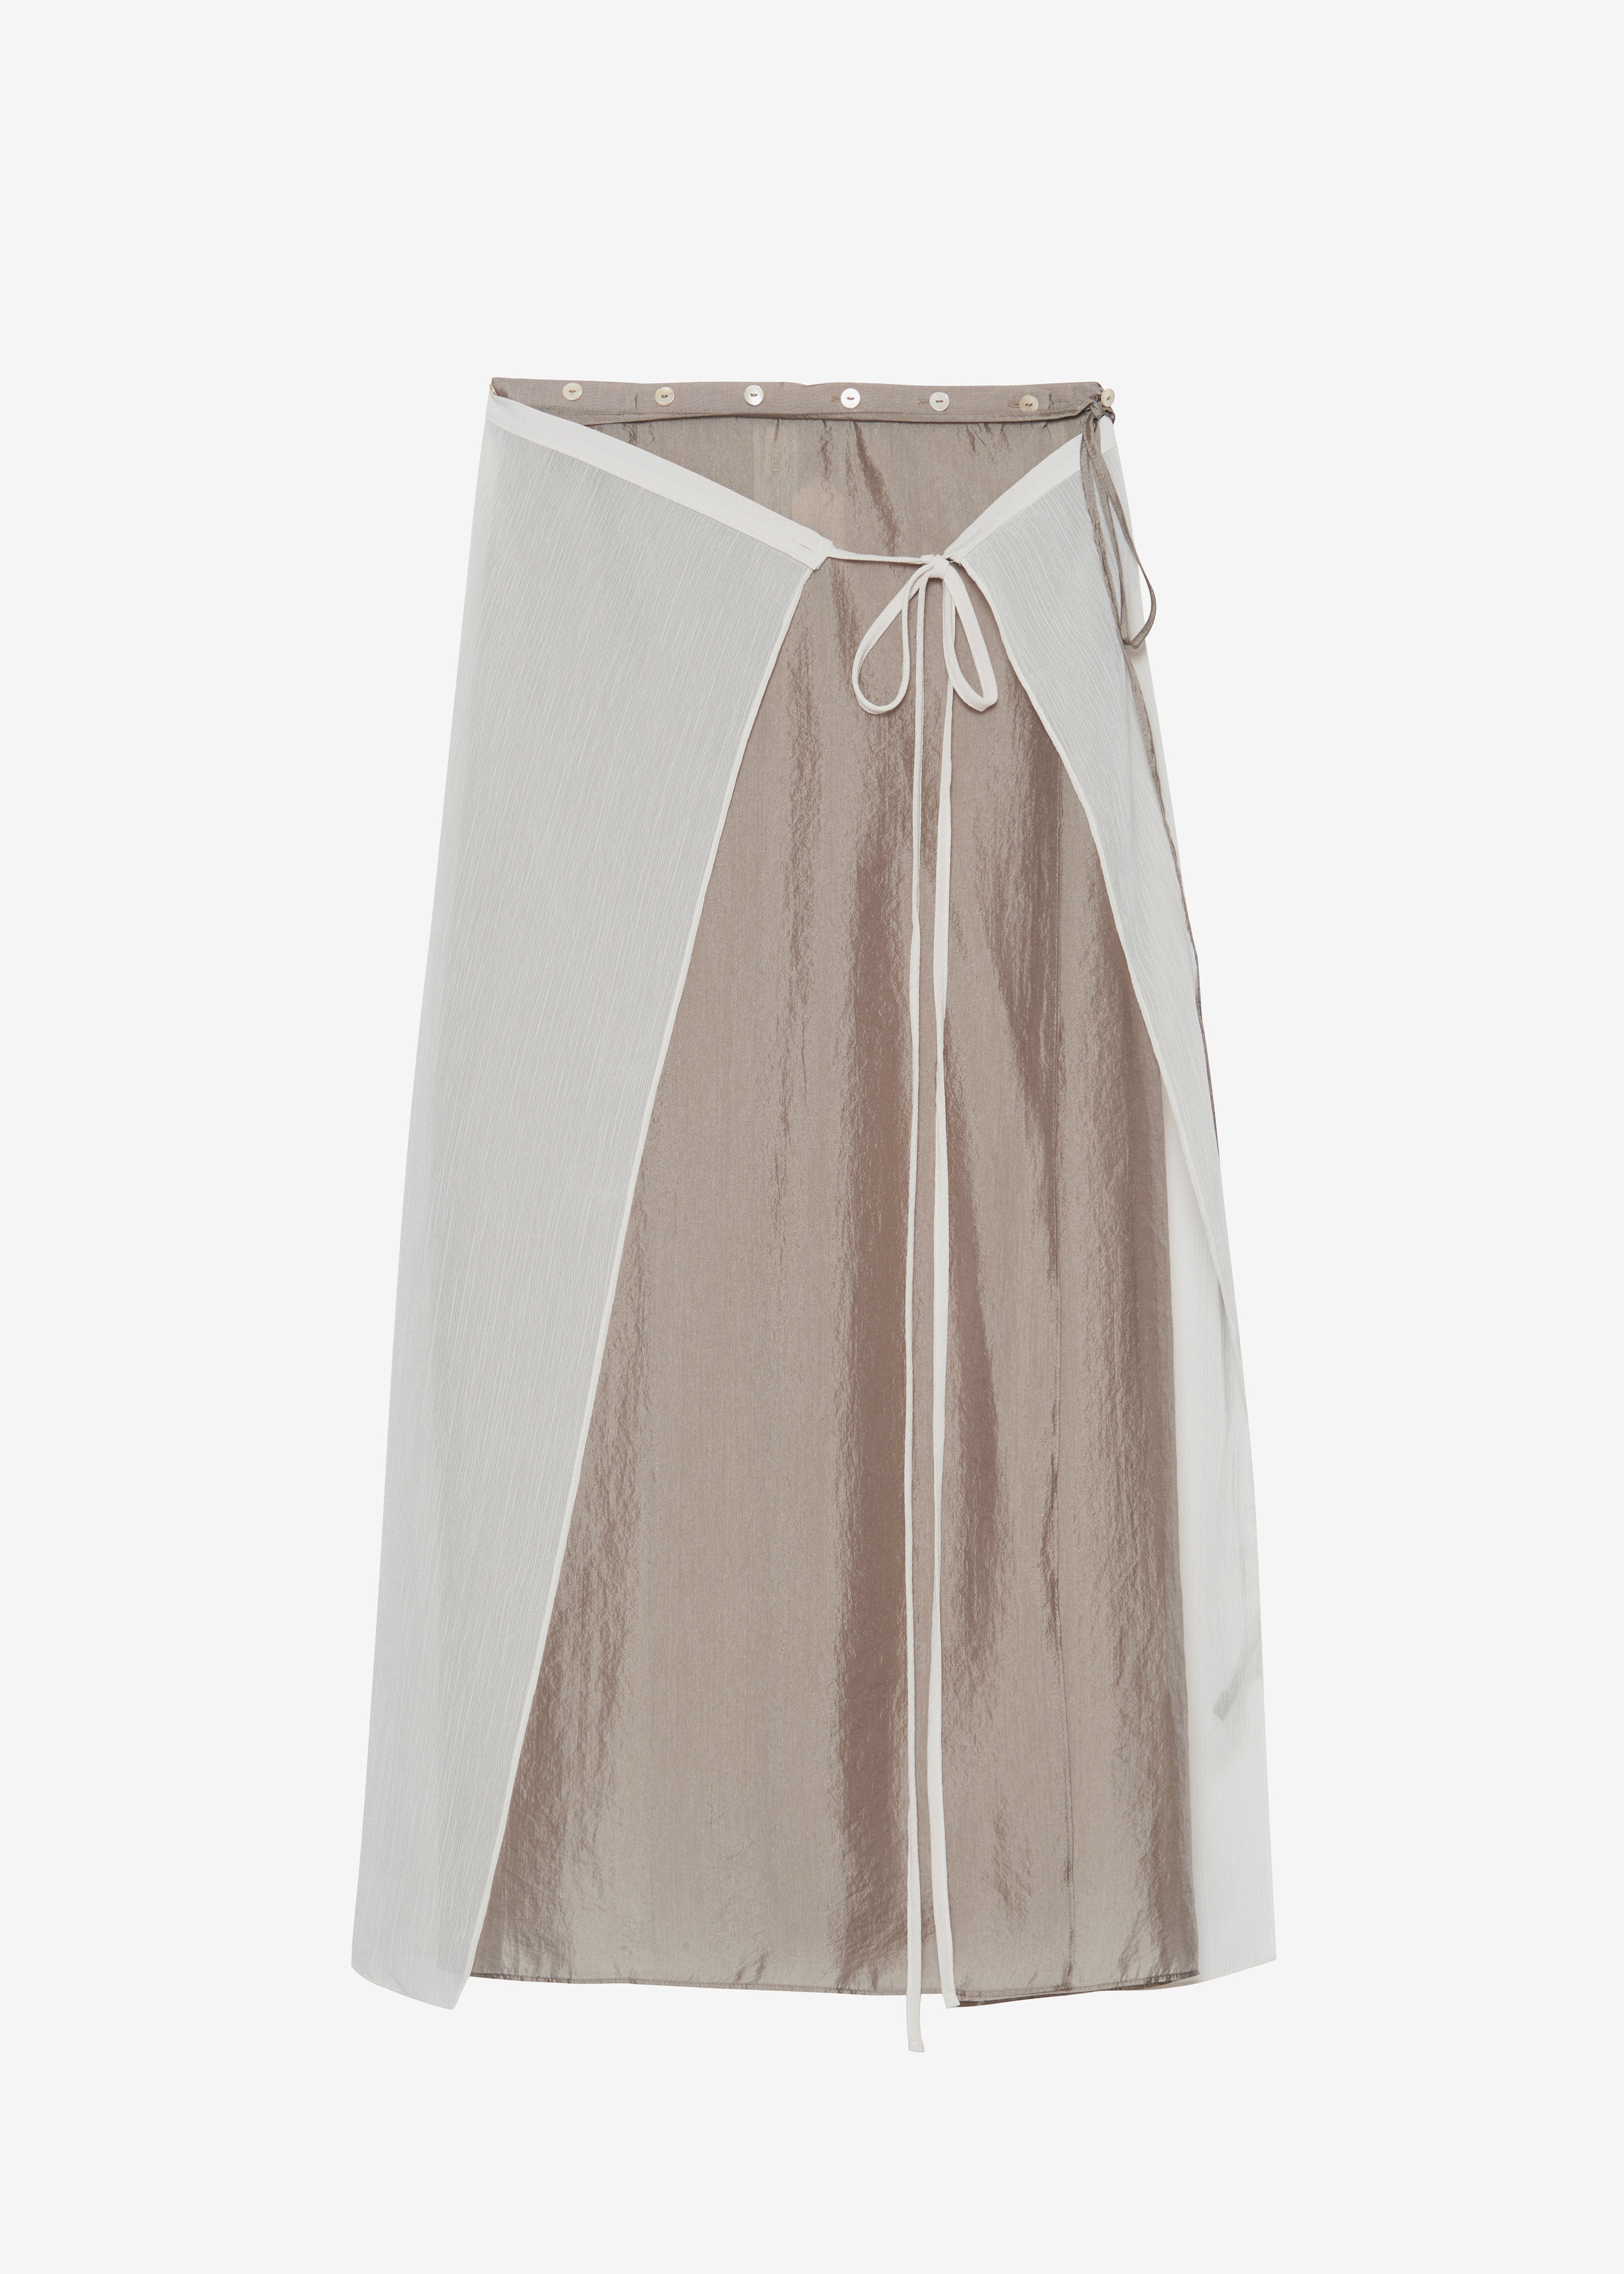 Tia Sheer Layered Skirt - Beige - 10